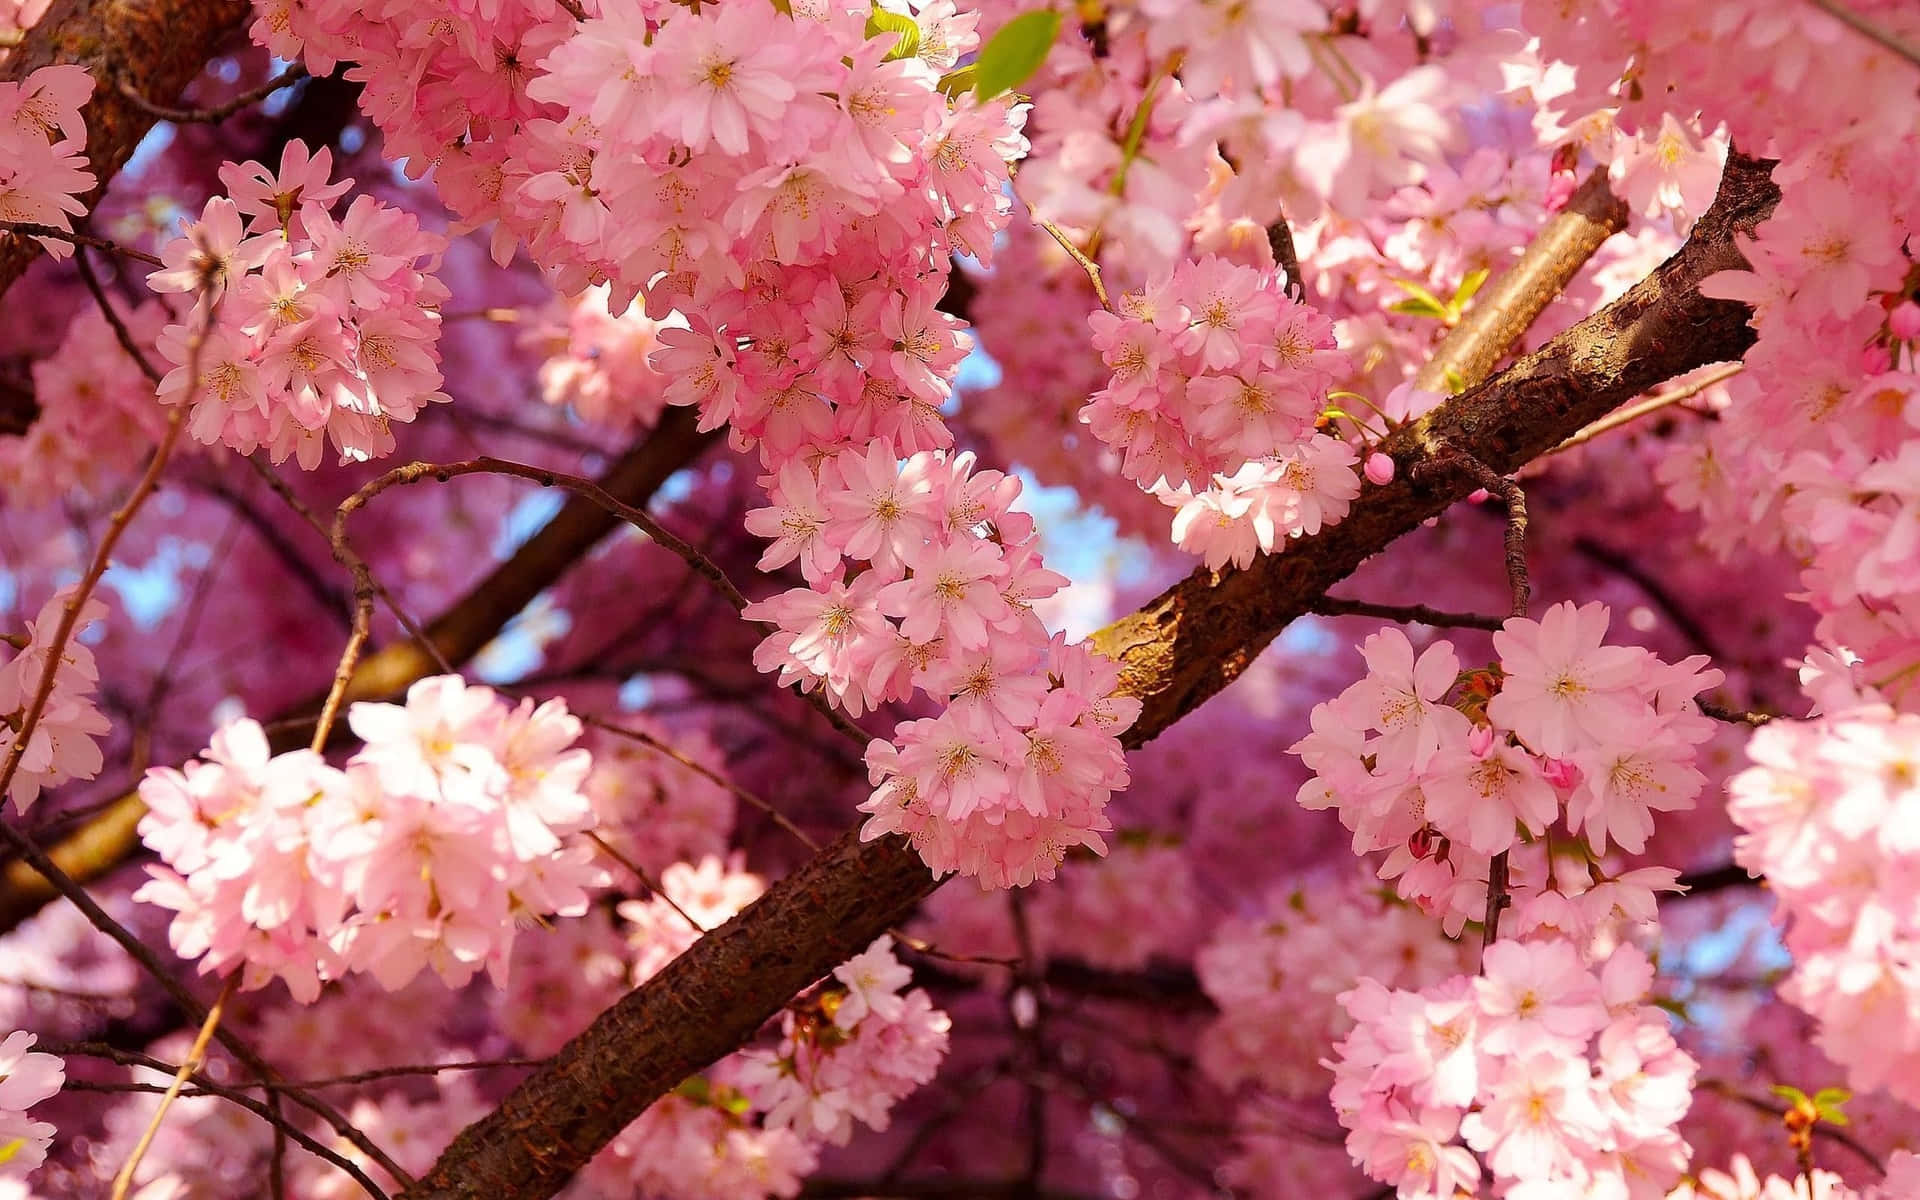 Exquisite sakura blossom illuminated by sunlight